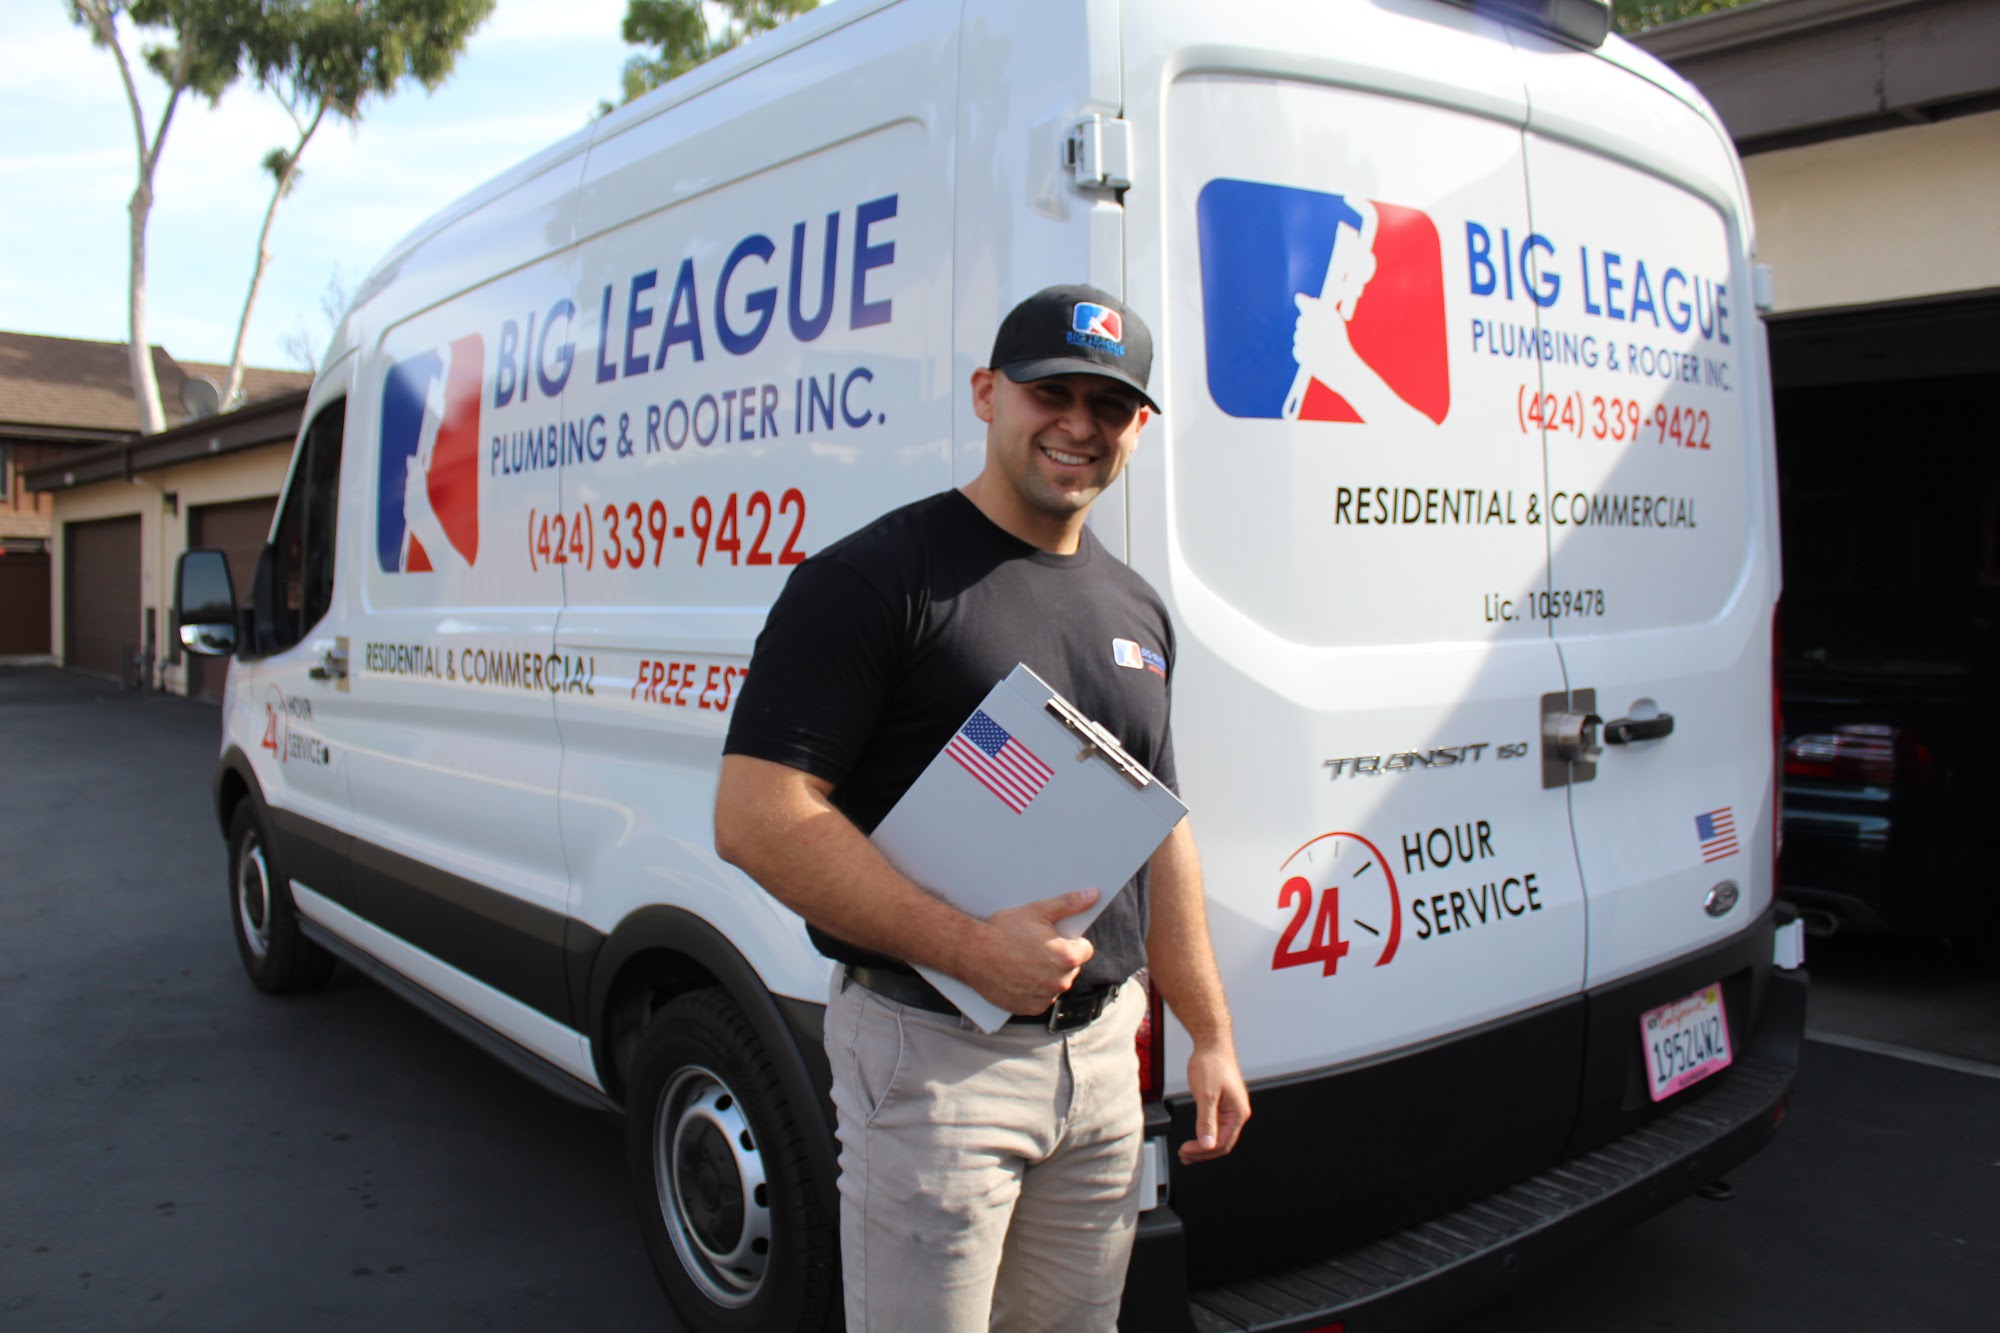 Big League Plumbing & Rooter Inc